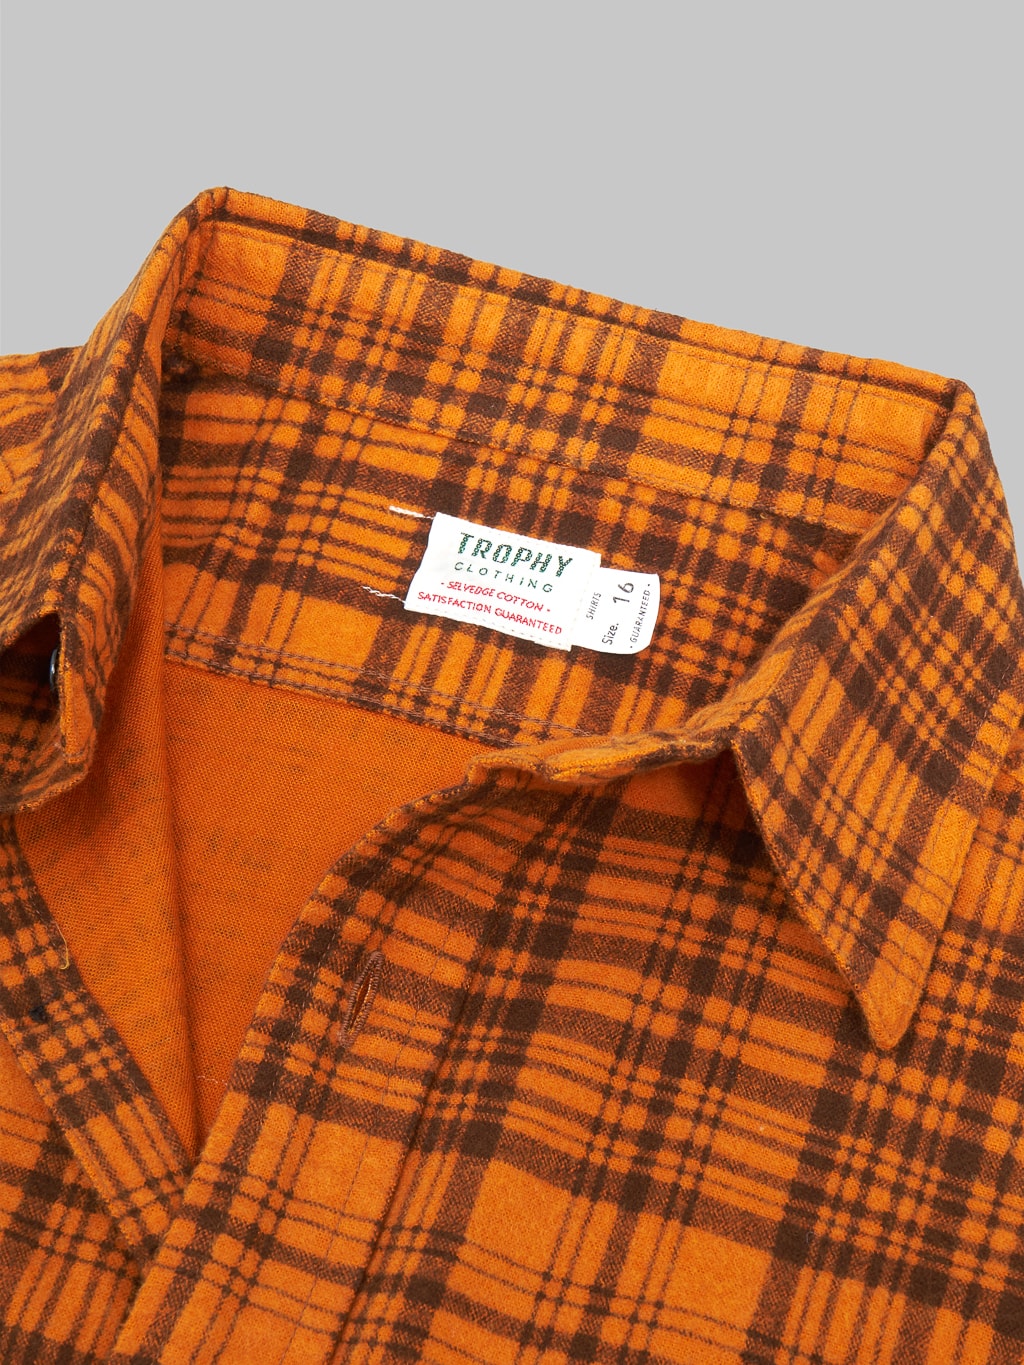 Trophy Clothing Machine Signal Check Shirt Orange collar